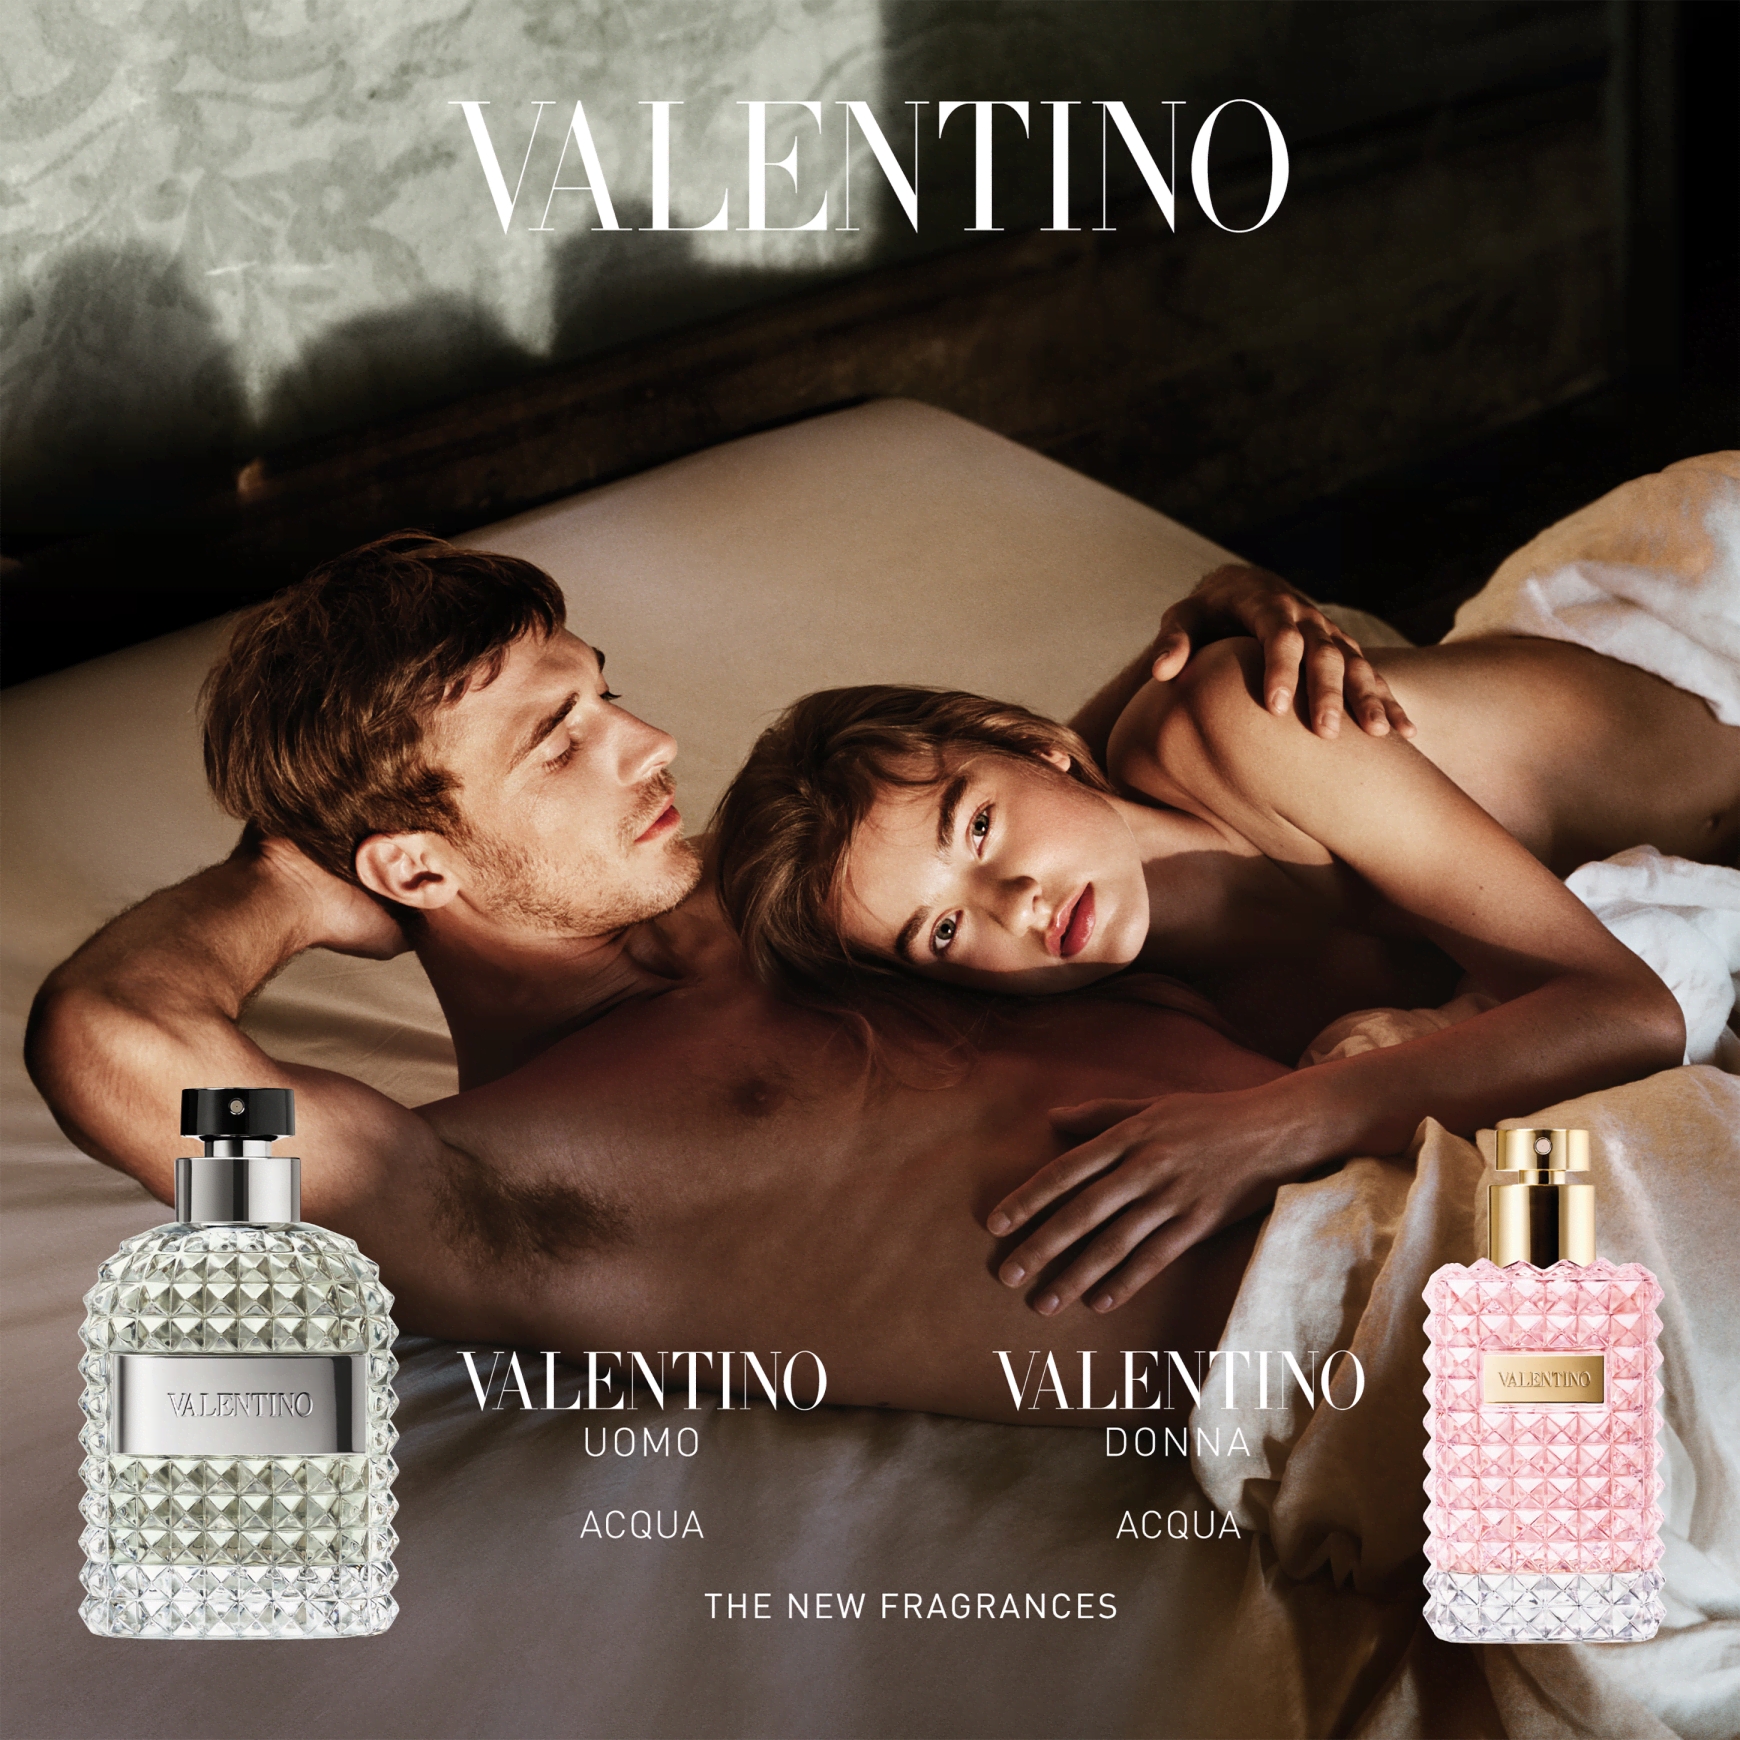 Donna Perfume by Valentino